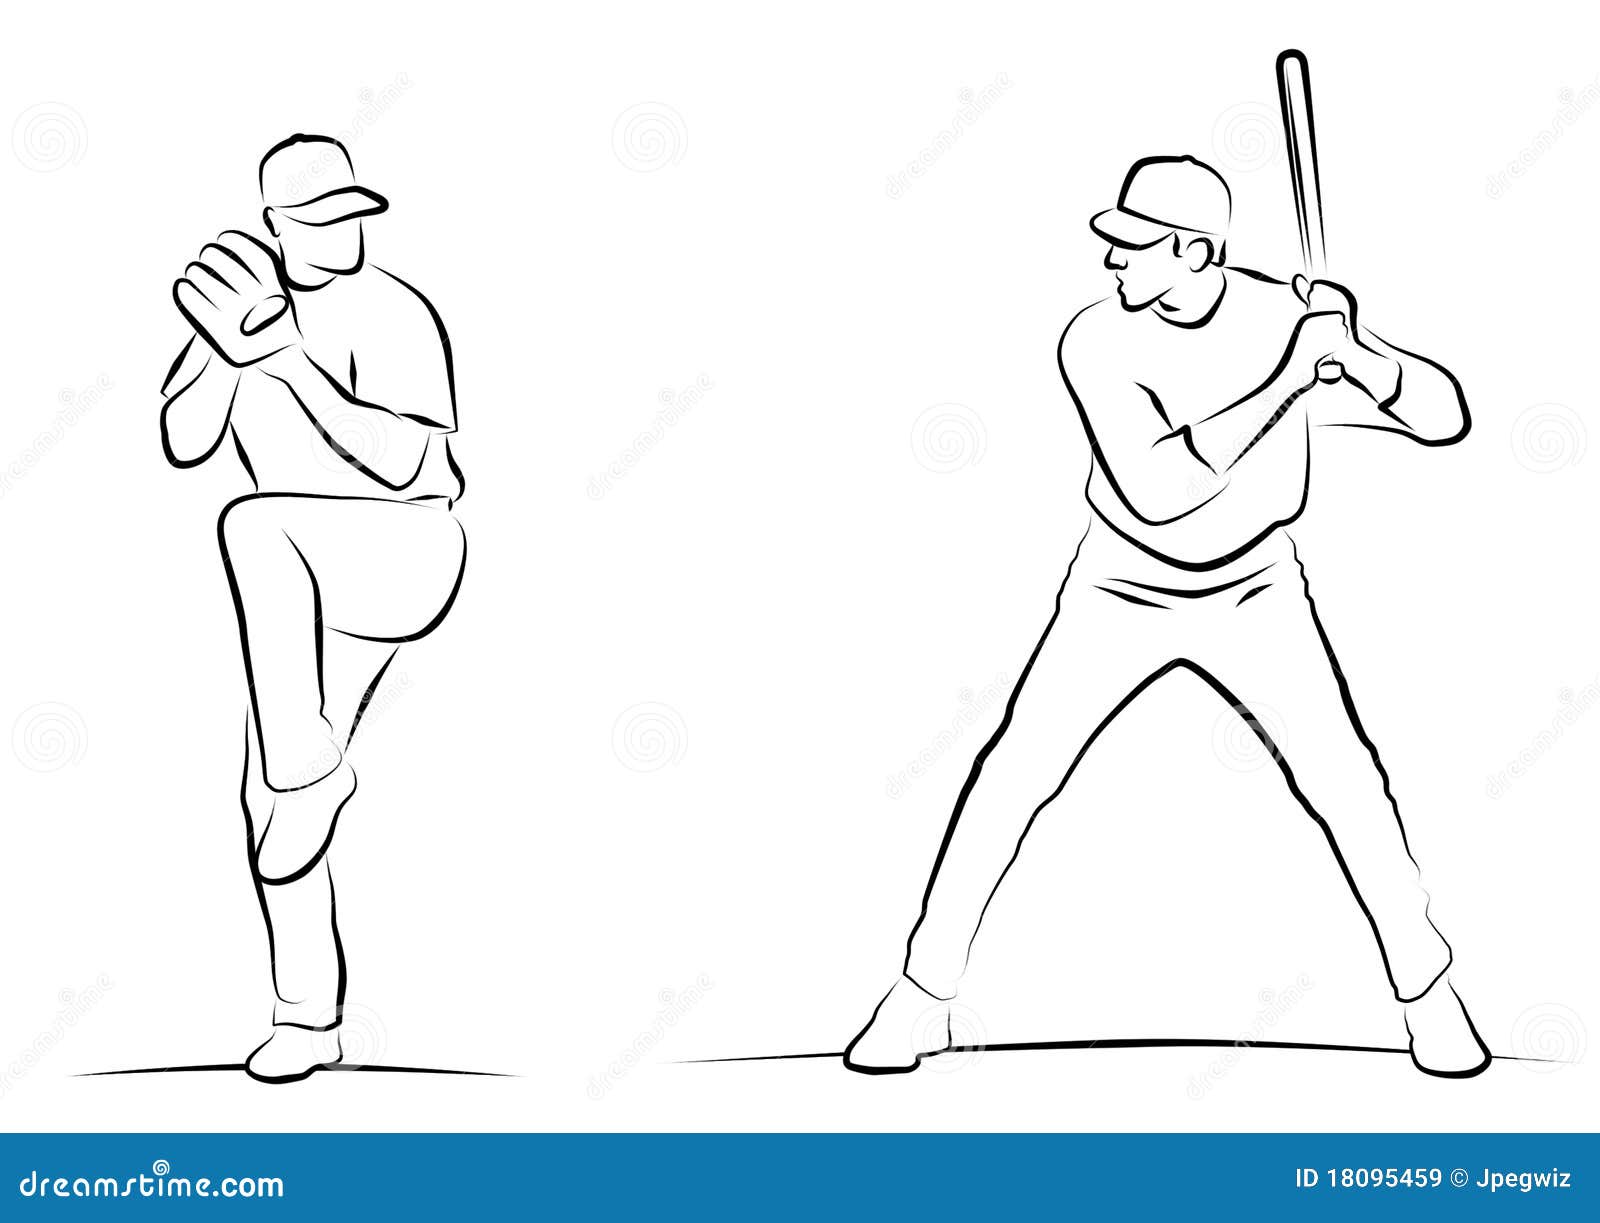 Baseball Line Drawing Stock Illustrations – 2,594 Baseball Line